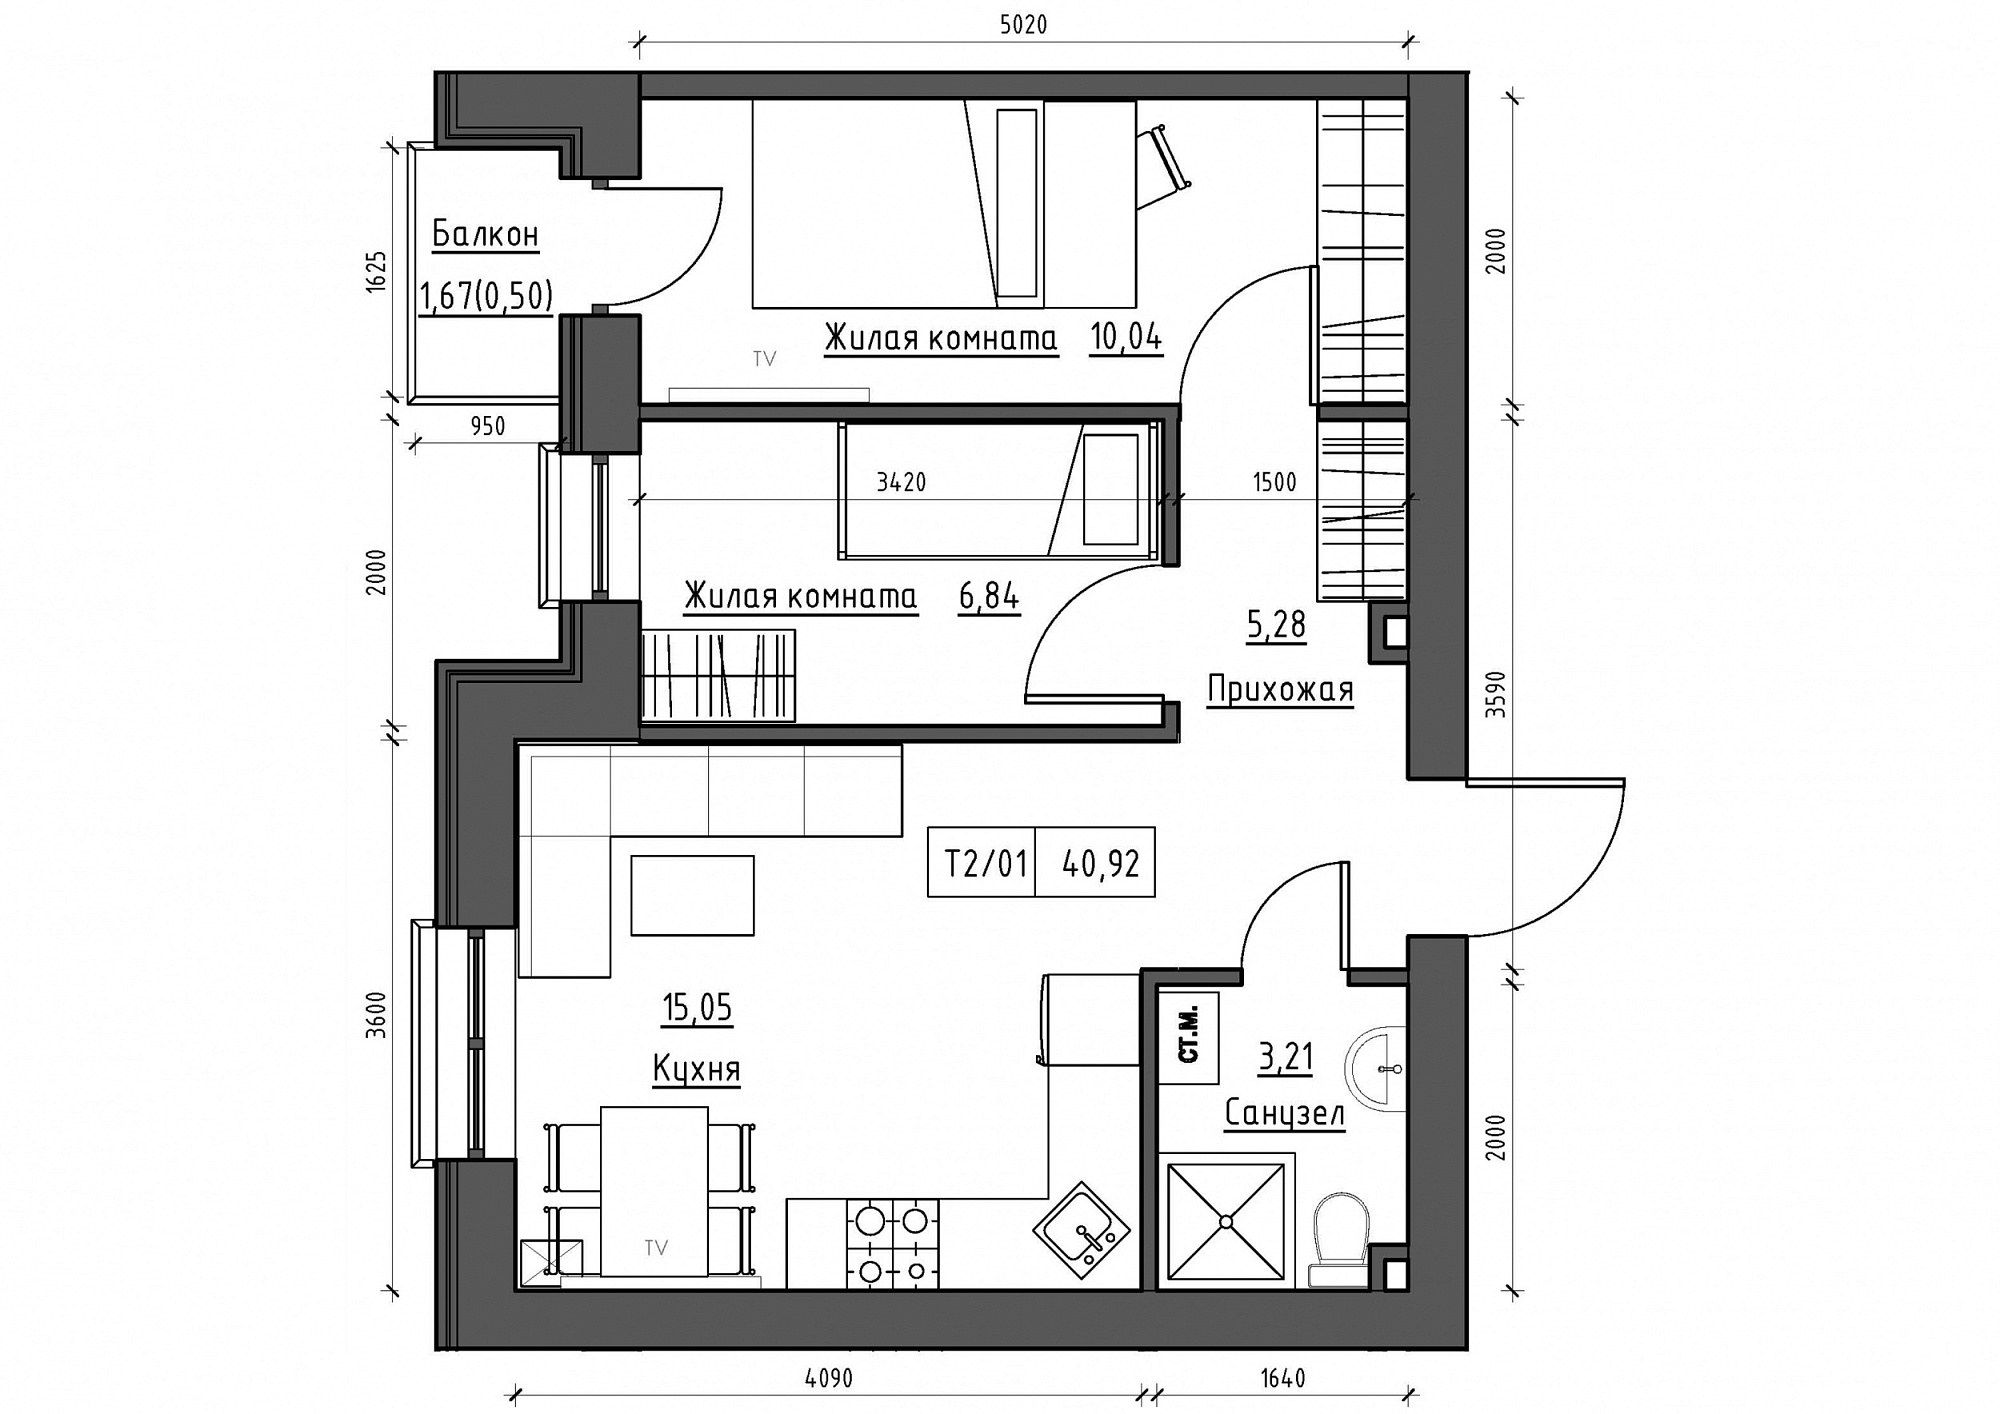 Planning 2-rm flats area 40.92m2, KS-012-02/0010.